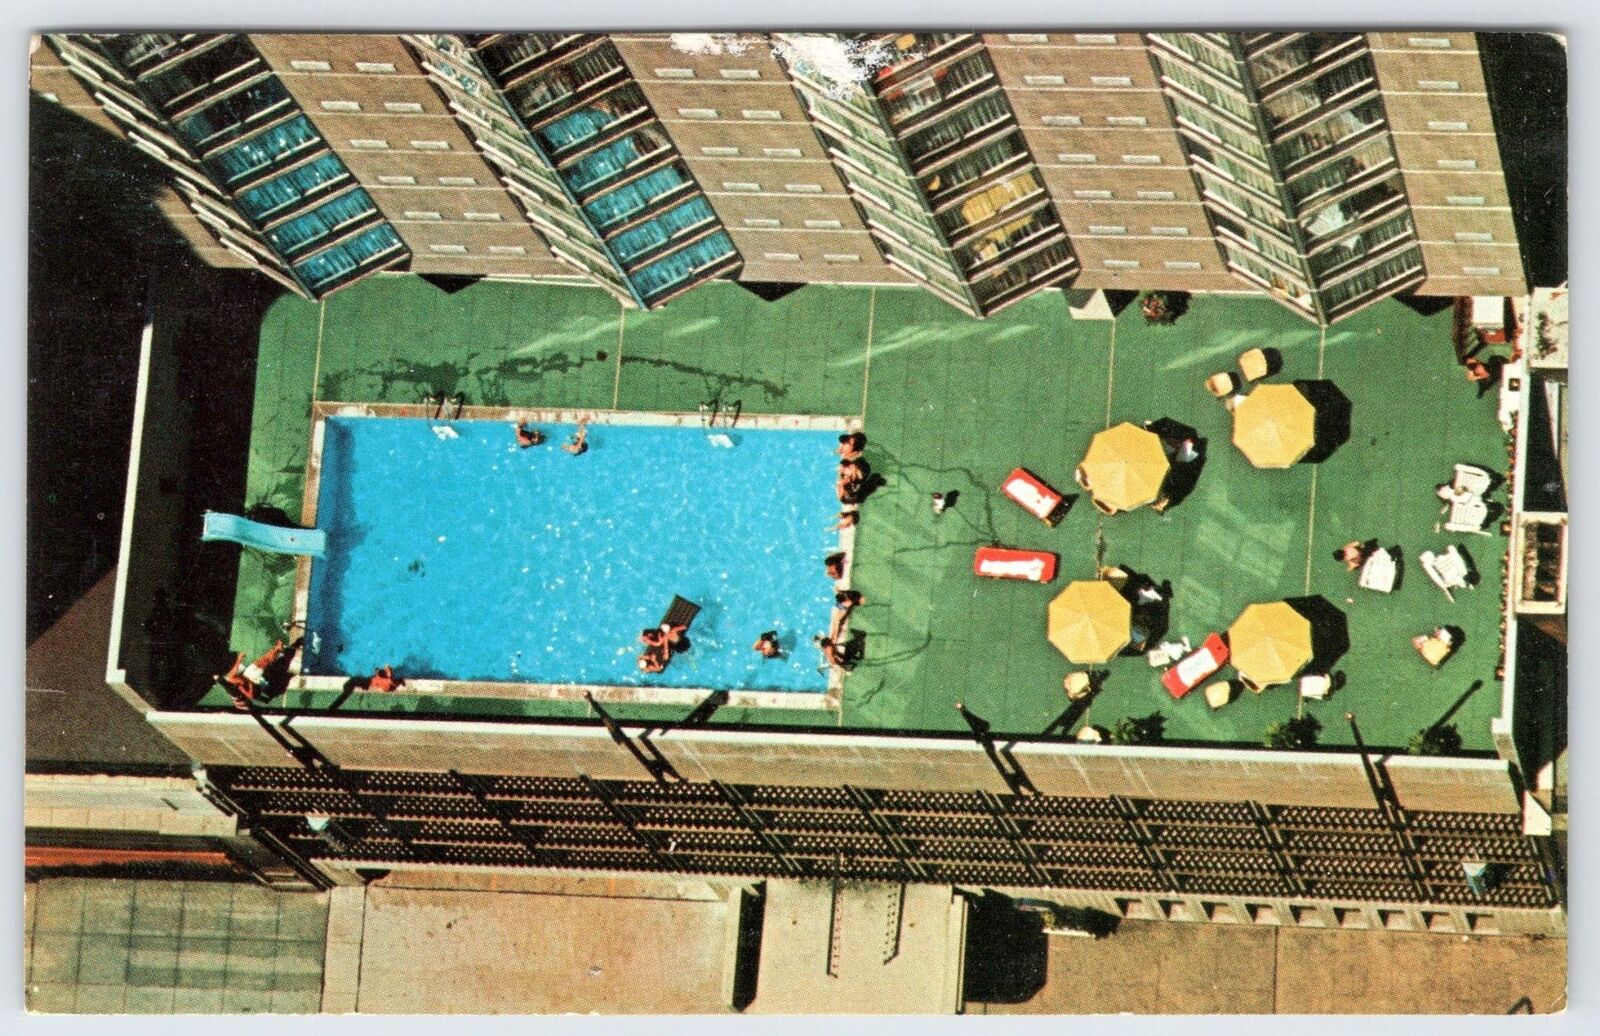 1965 HOLIDAY INN ROOFTOP POOL AERIAL VIEW PHILADELPHIA PA HOTEL MOTEL POSTCARD